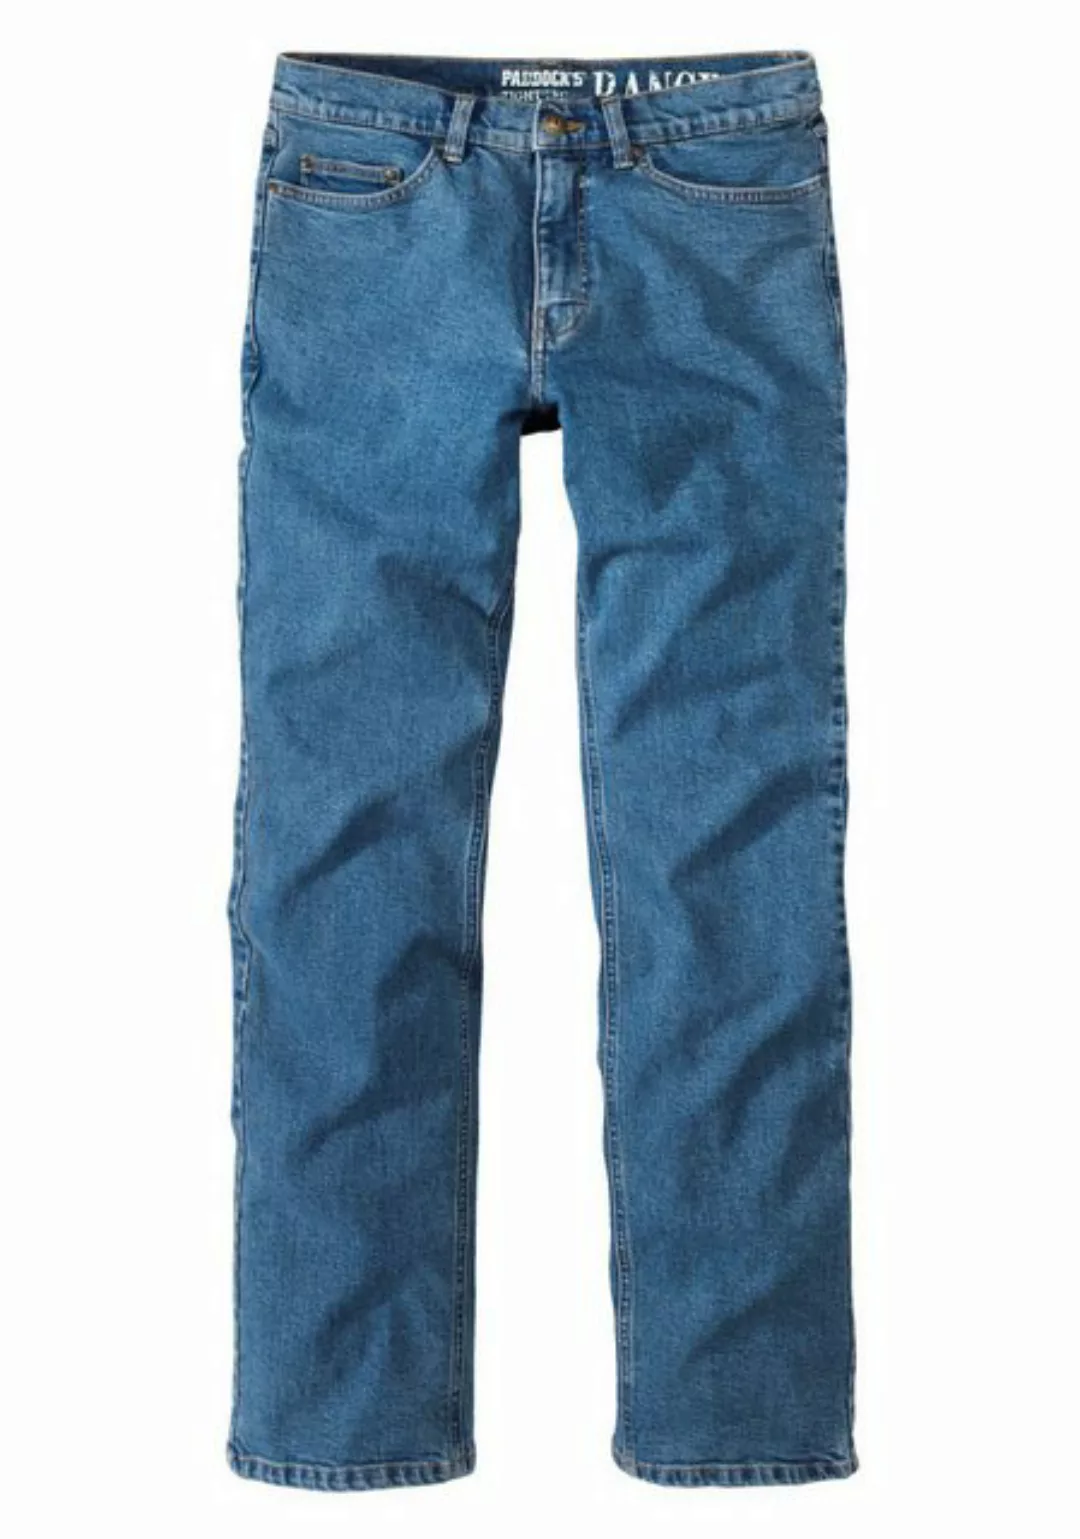 Paddock's 5-Pocket-Jeans PADDOCKS RANGER blue indigo 80253 1606.4643 günstig online kaufen